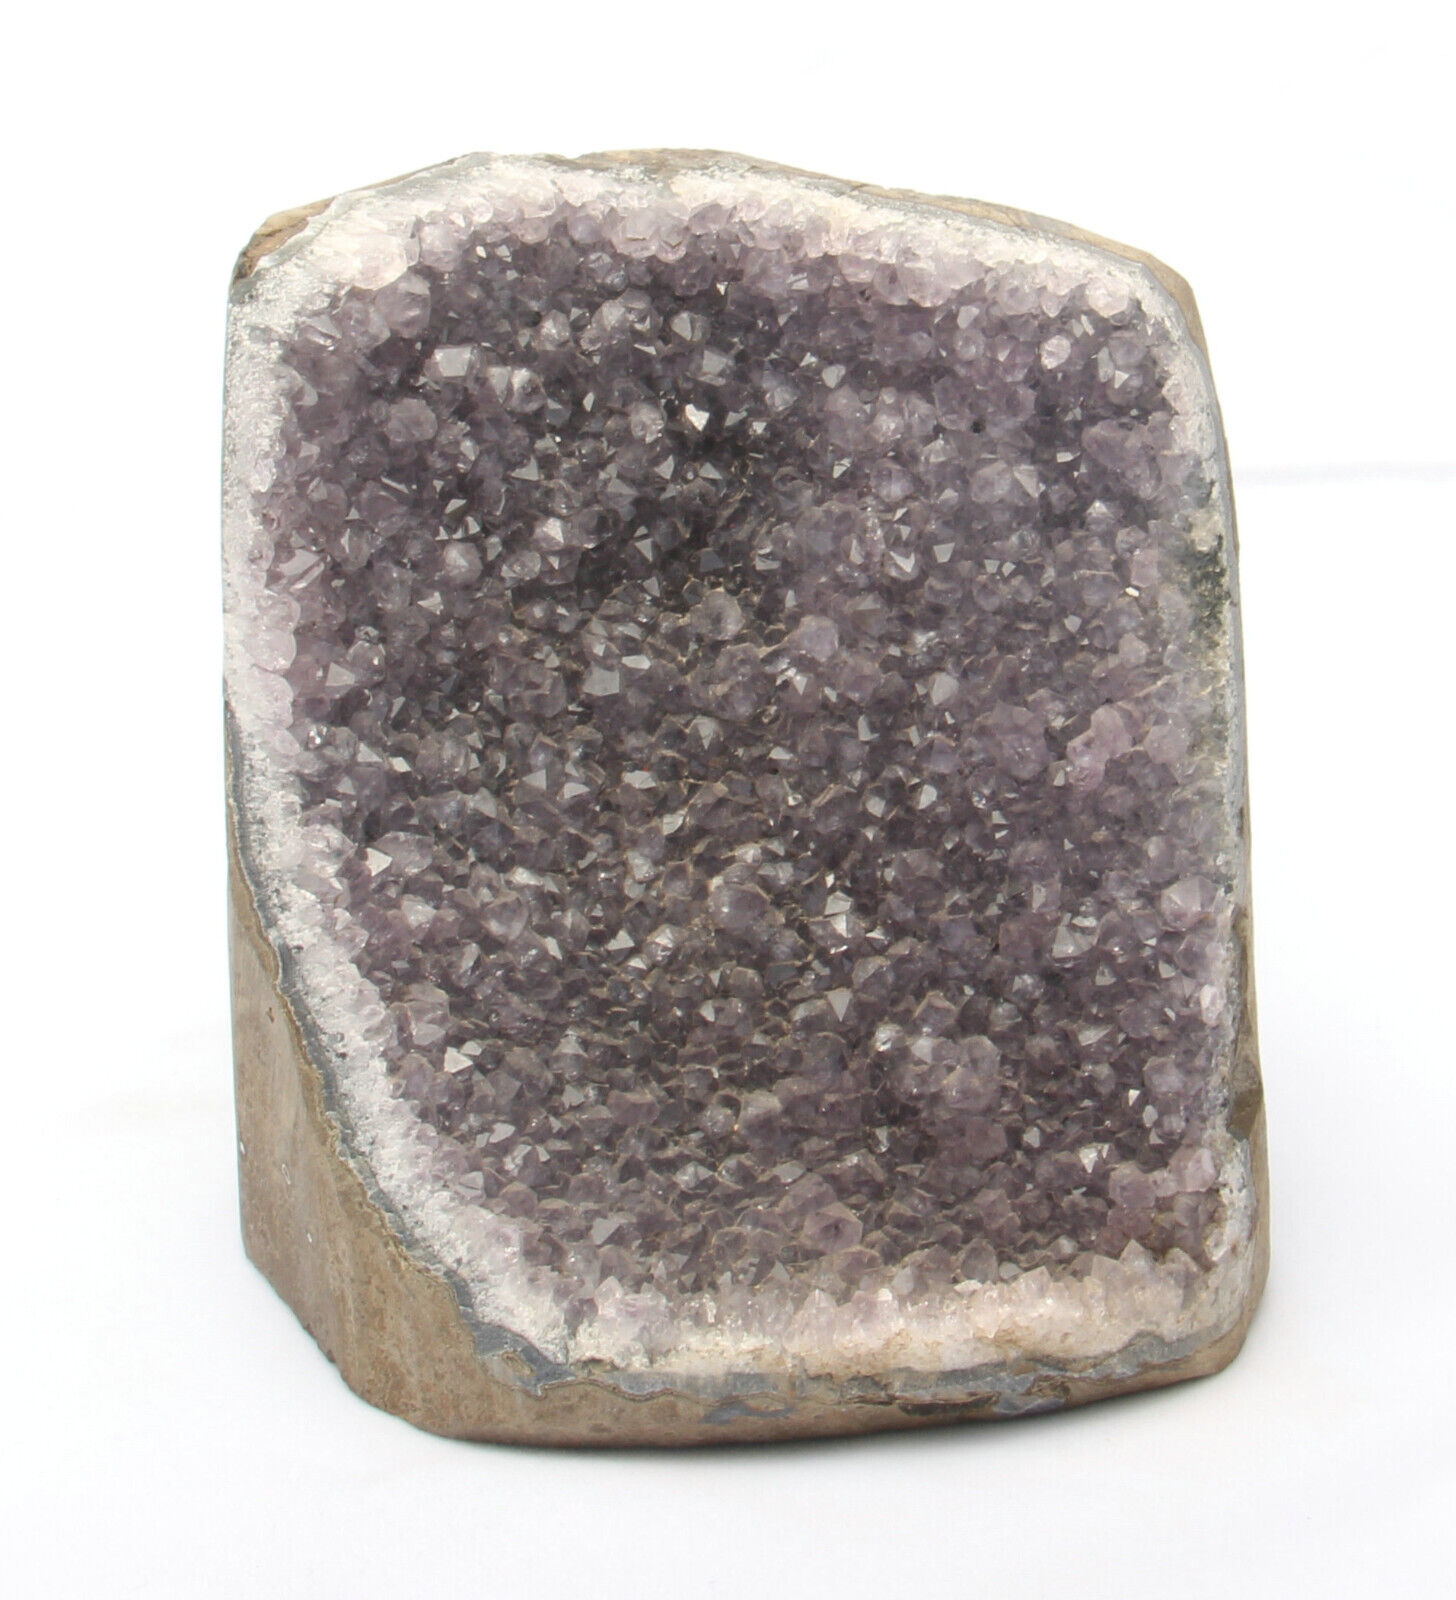 1940g Natural Amethyst cluster  Crystal Quartz Healing Decorate